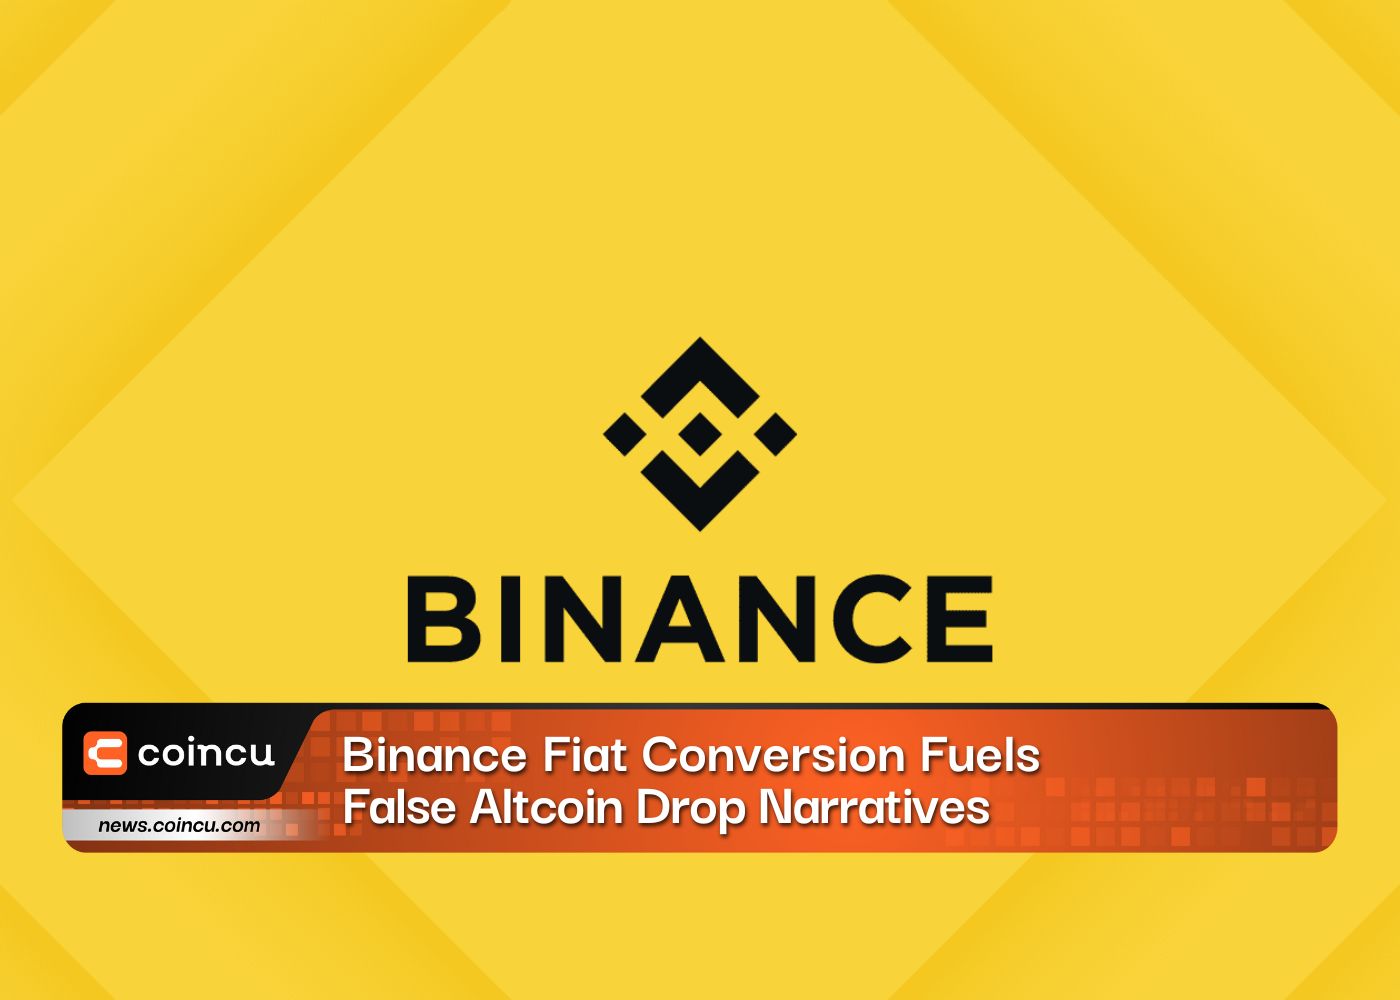 Binance Fiat Conversion Fuels